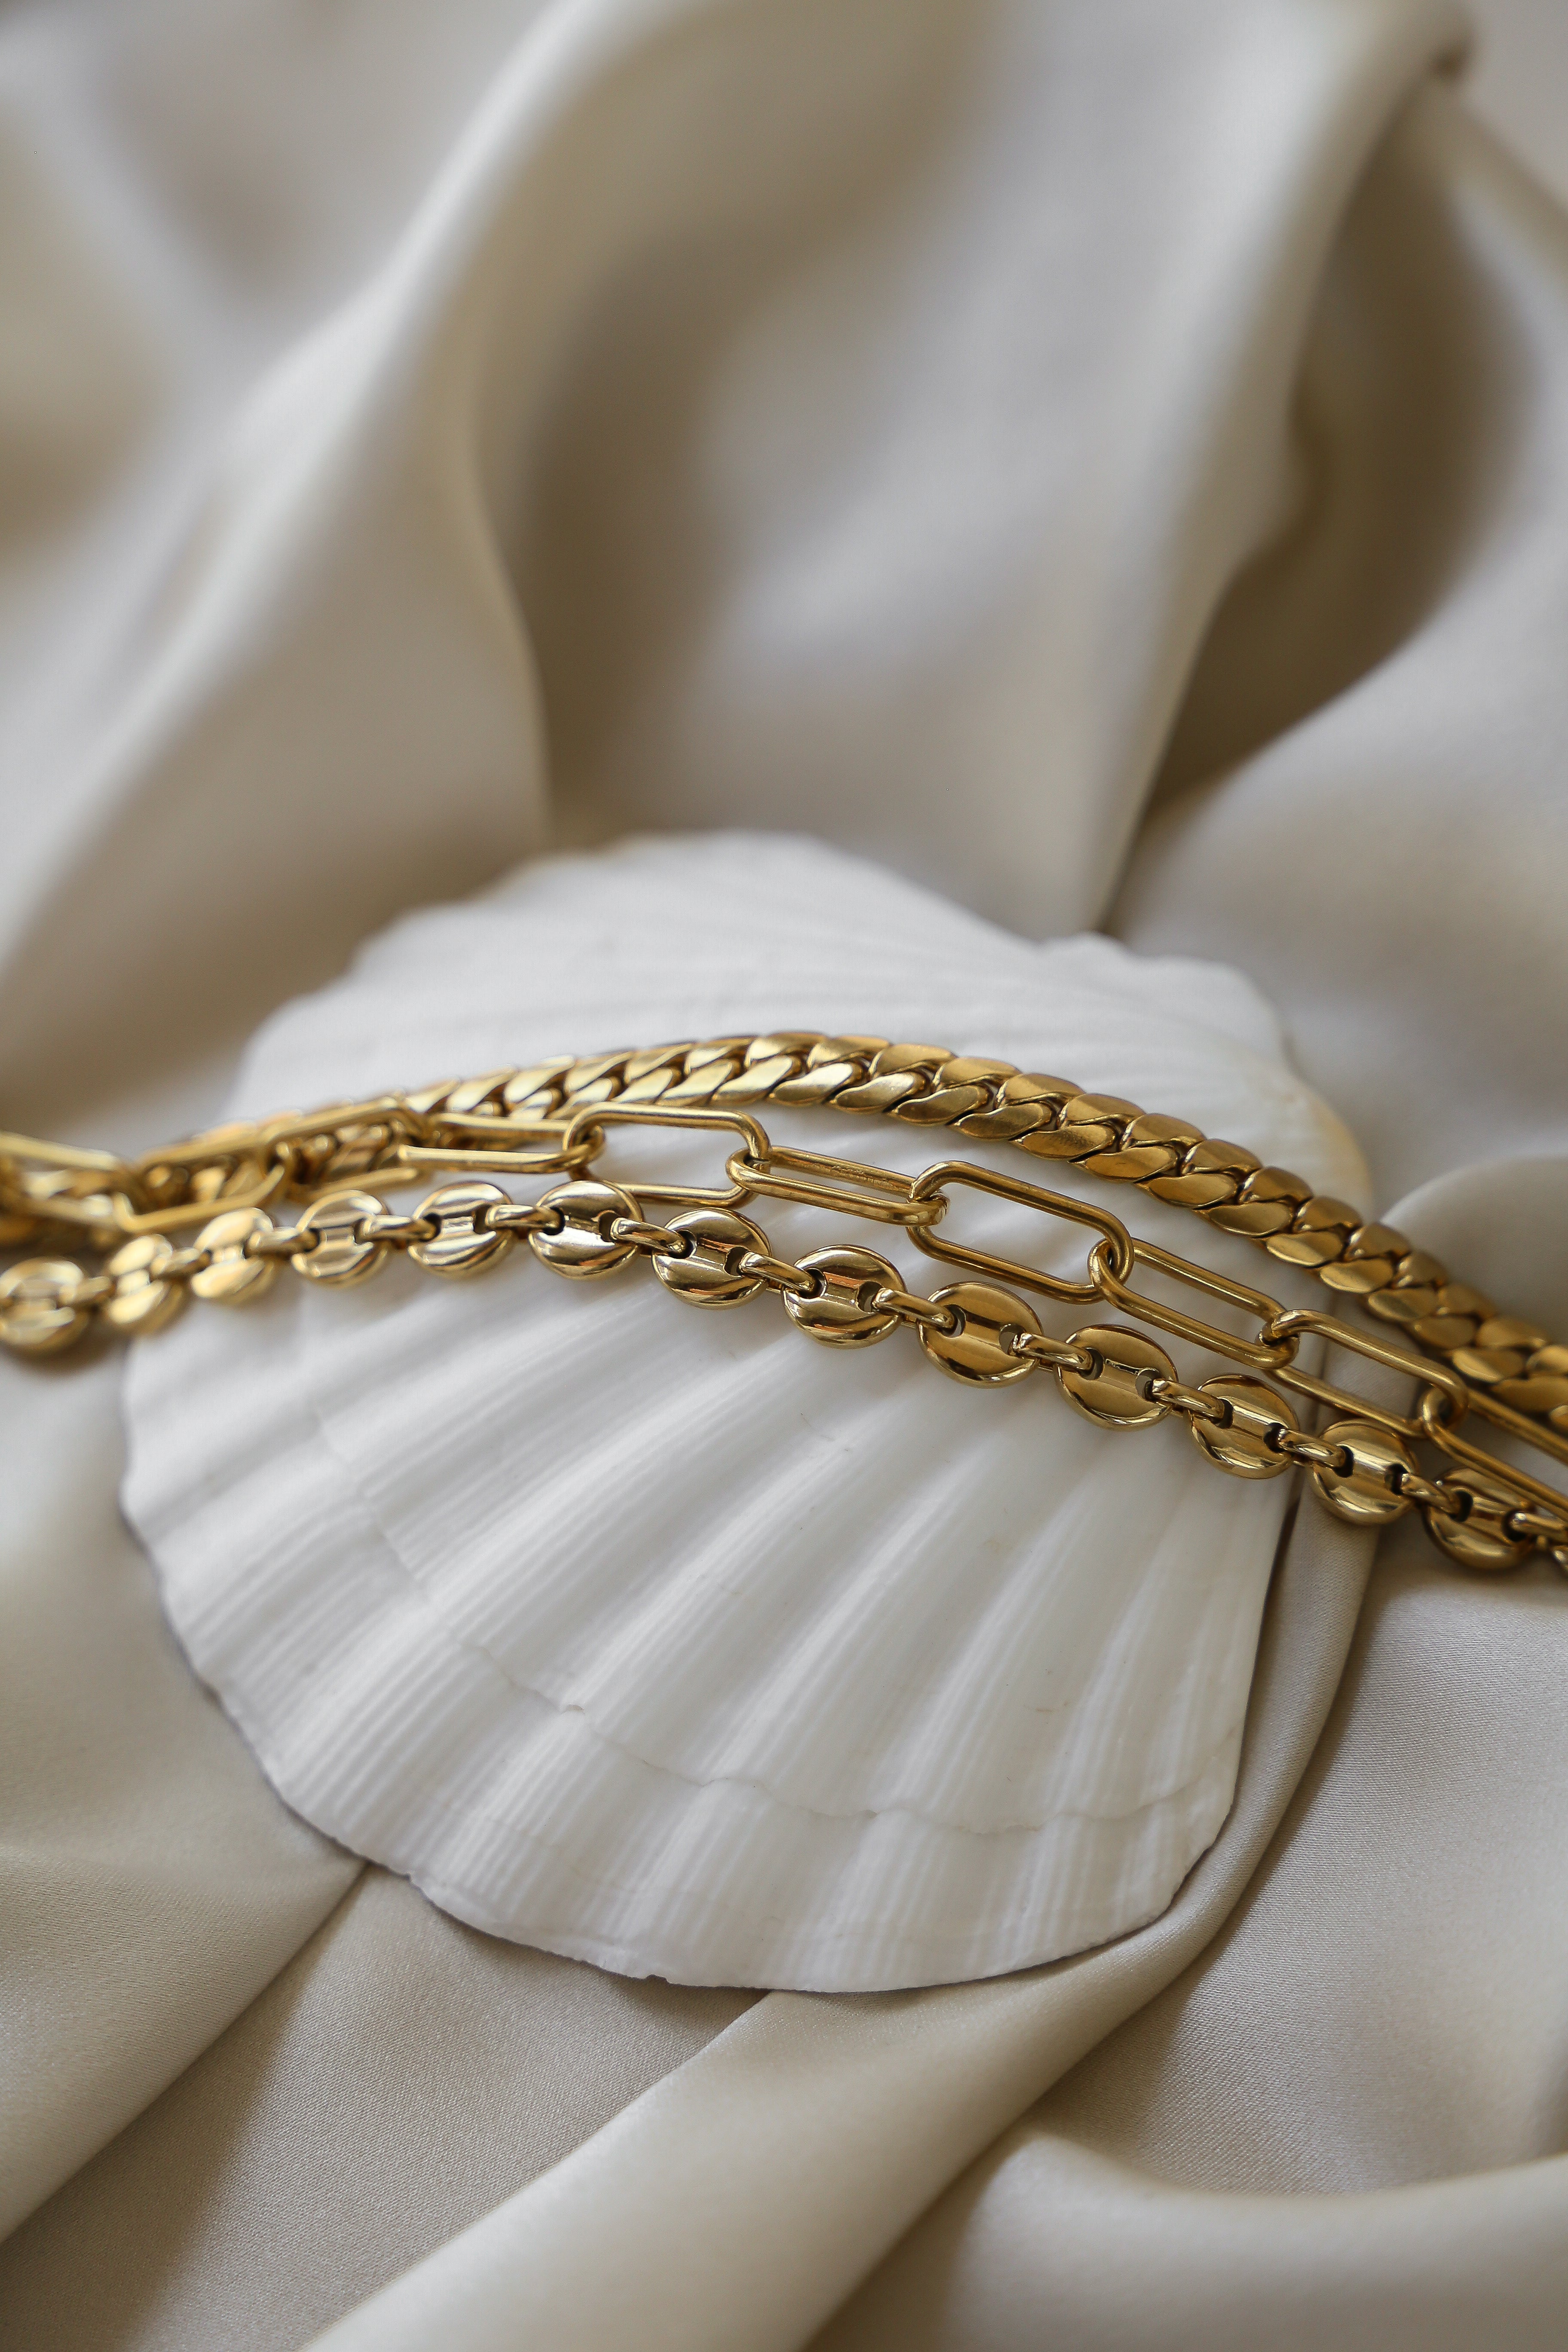 Freya Anklet - Boutique Minimaliste has waterproof, durable, elegant and vintage inspired jewelry